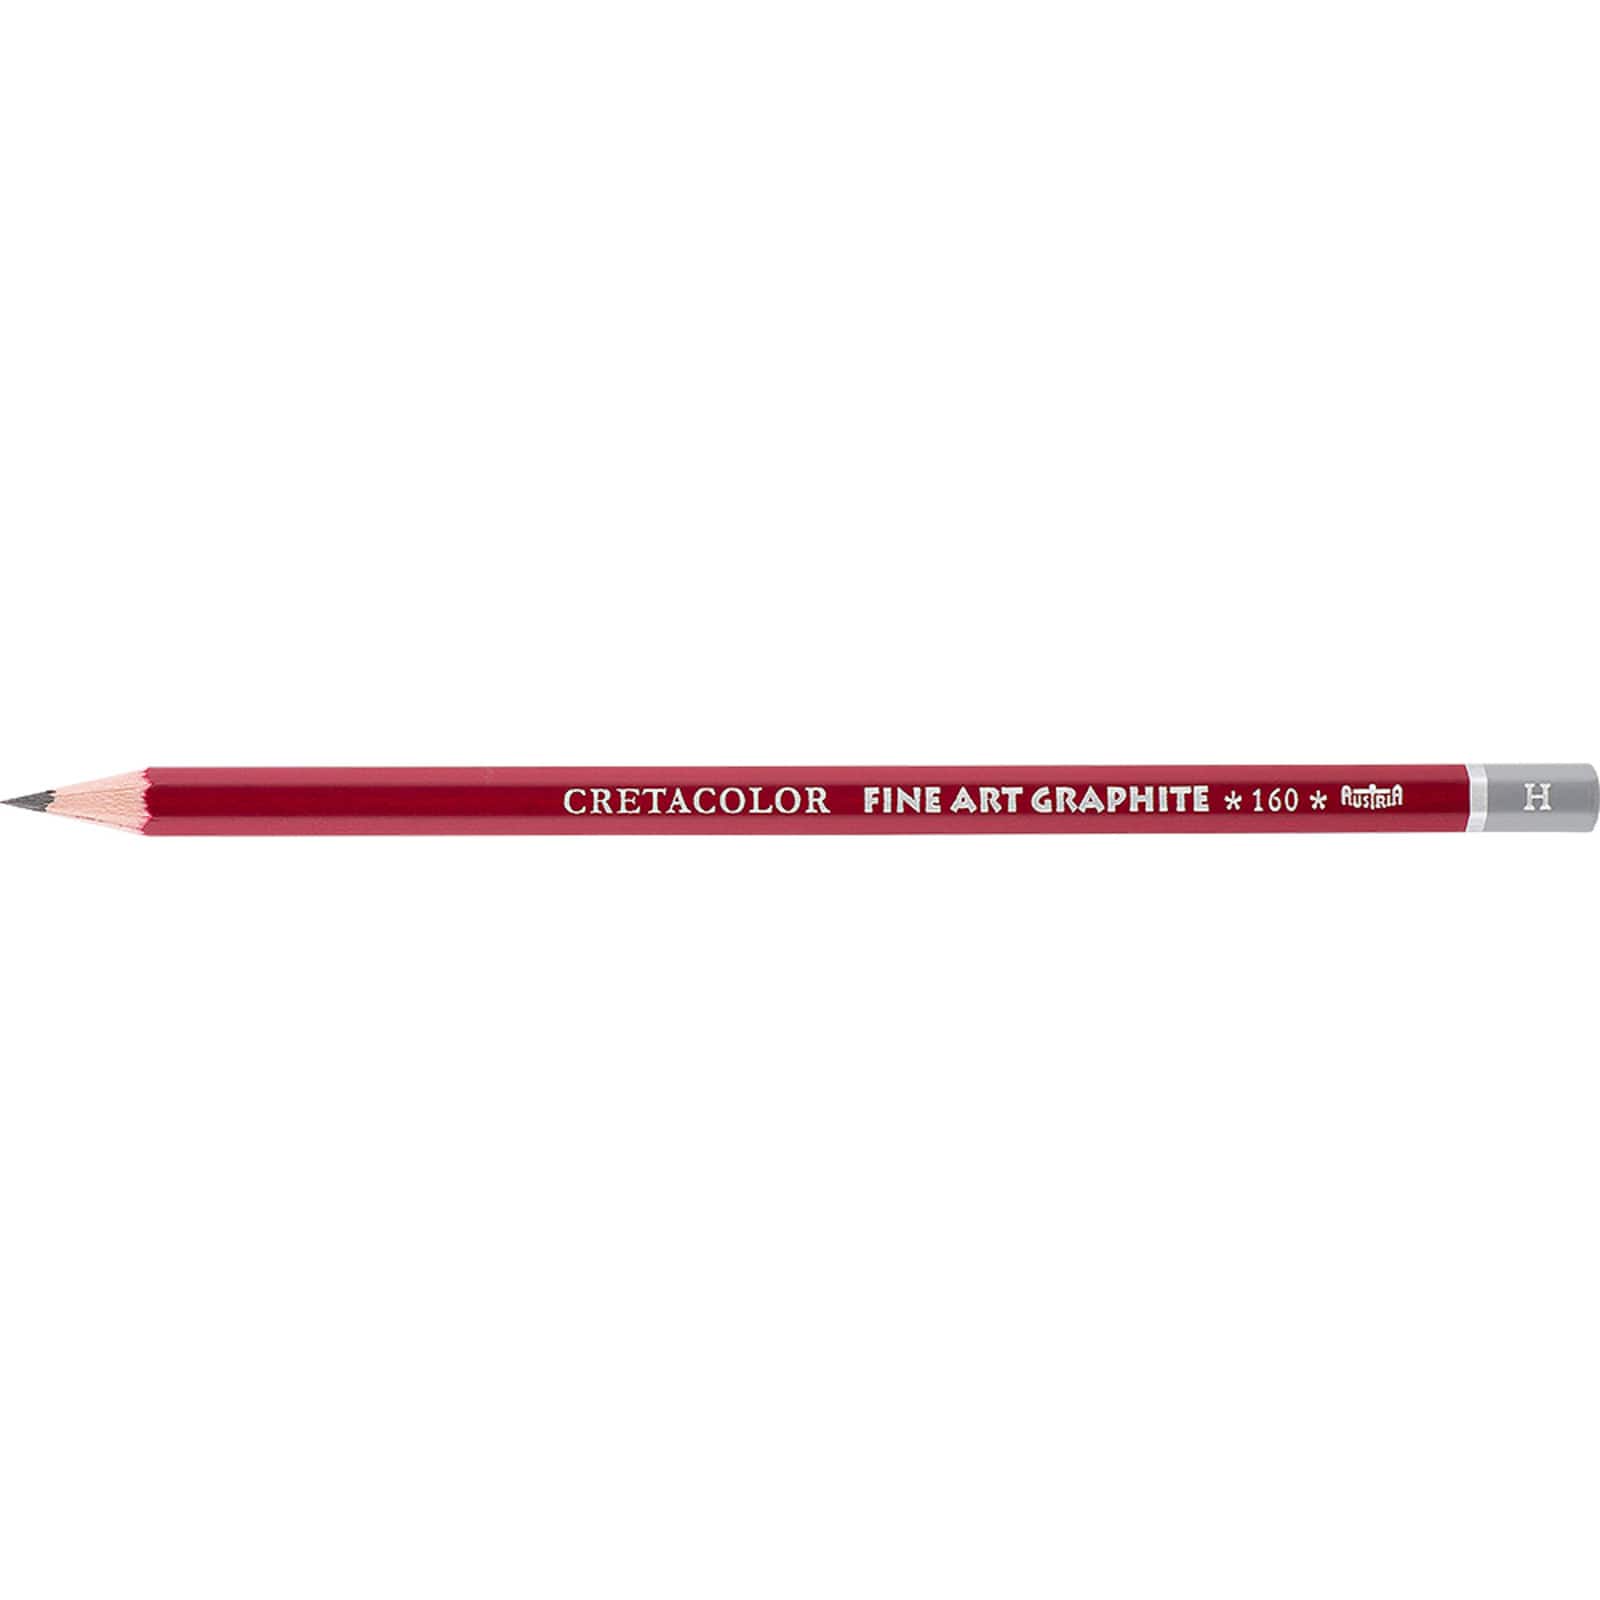 24 Pack: Cretacolor Fine Art Graphite Pencil